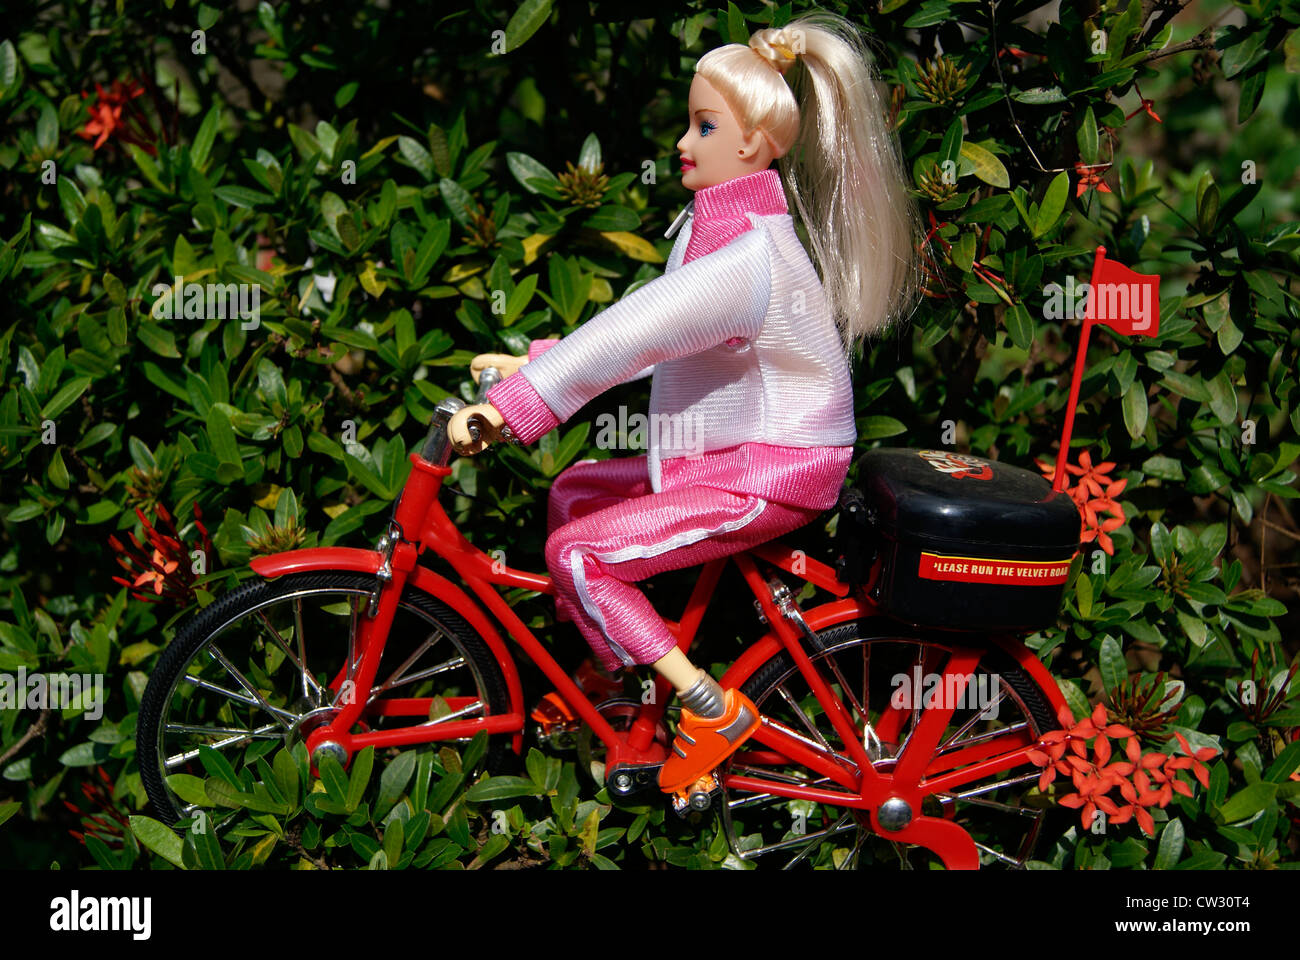 barbie cycle cycle